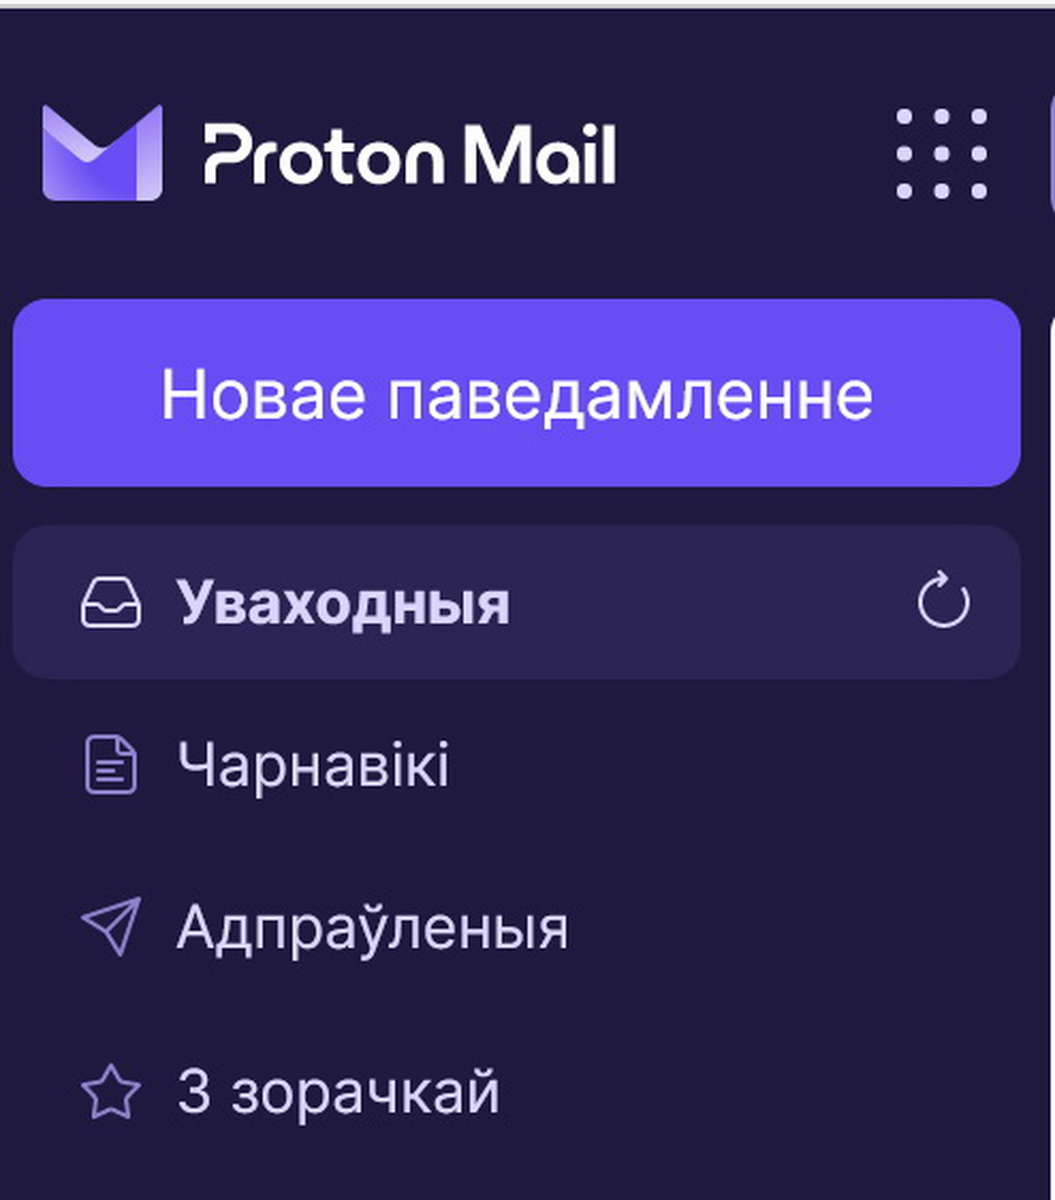 Proton Mail перевели на беларусский язык